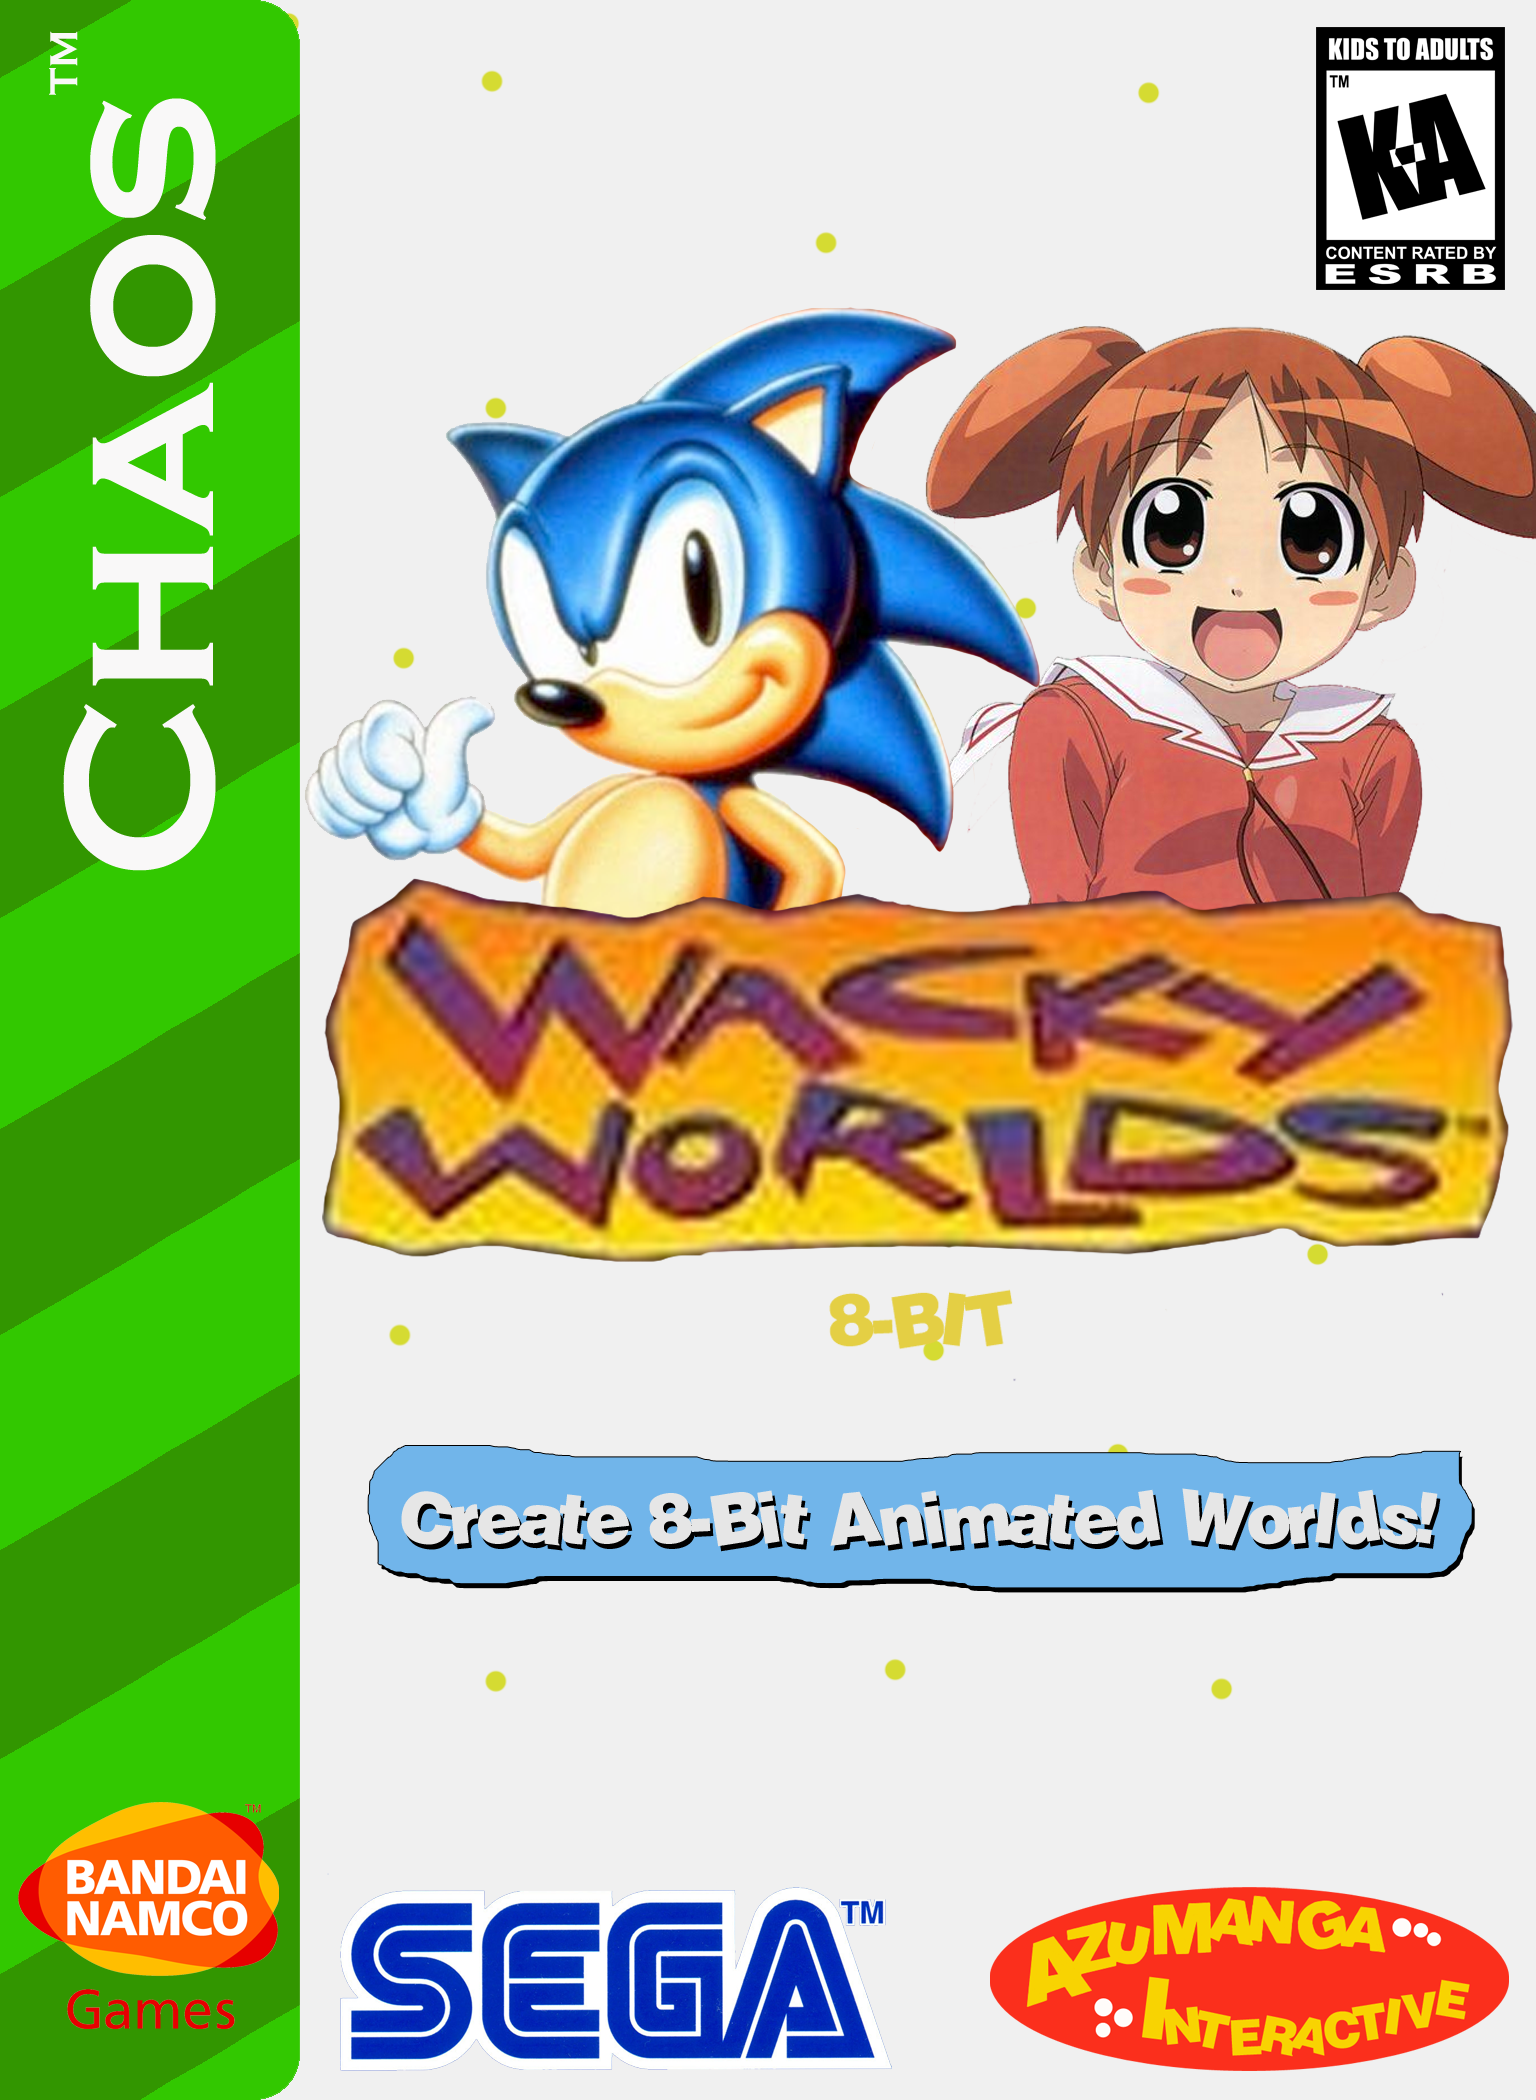 Sega's Wacky Worlds 8-Bit, Video Games Fanon Wiki